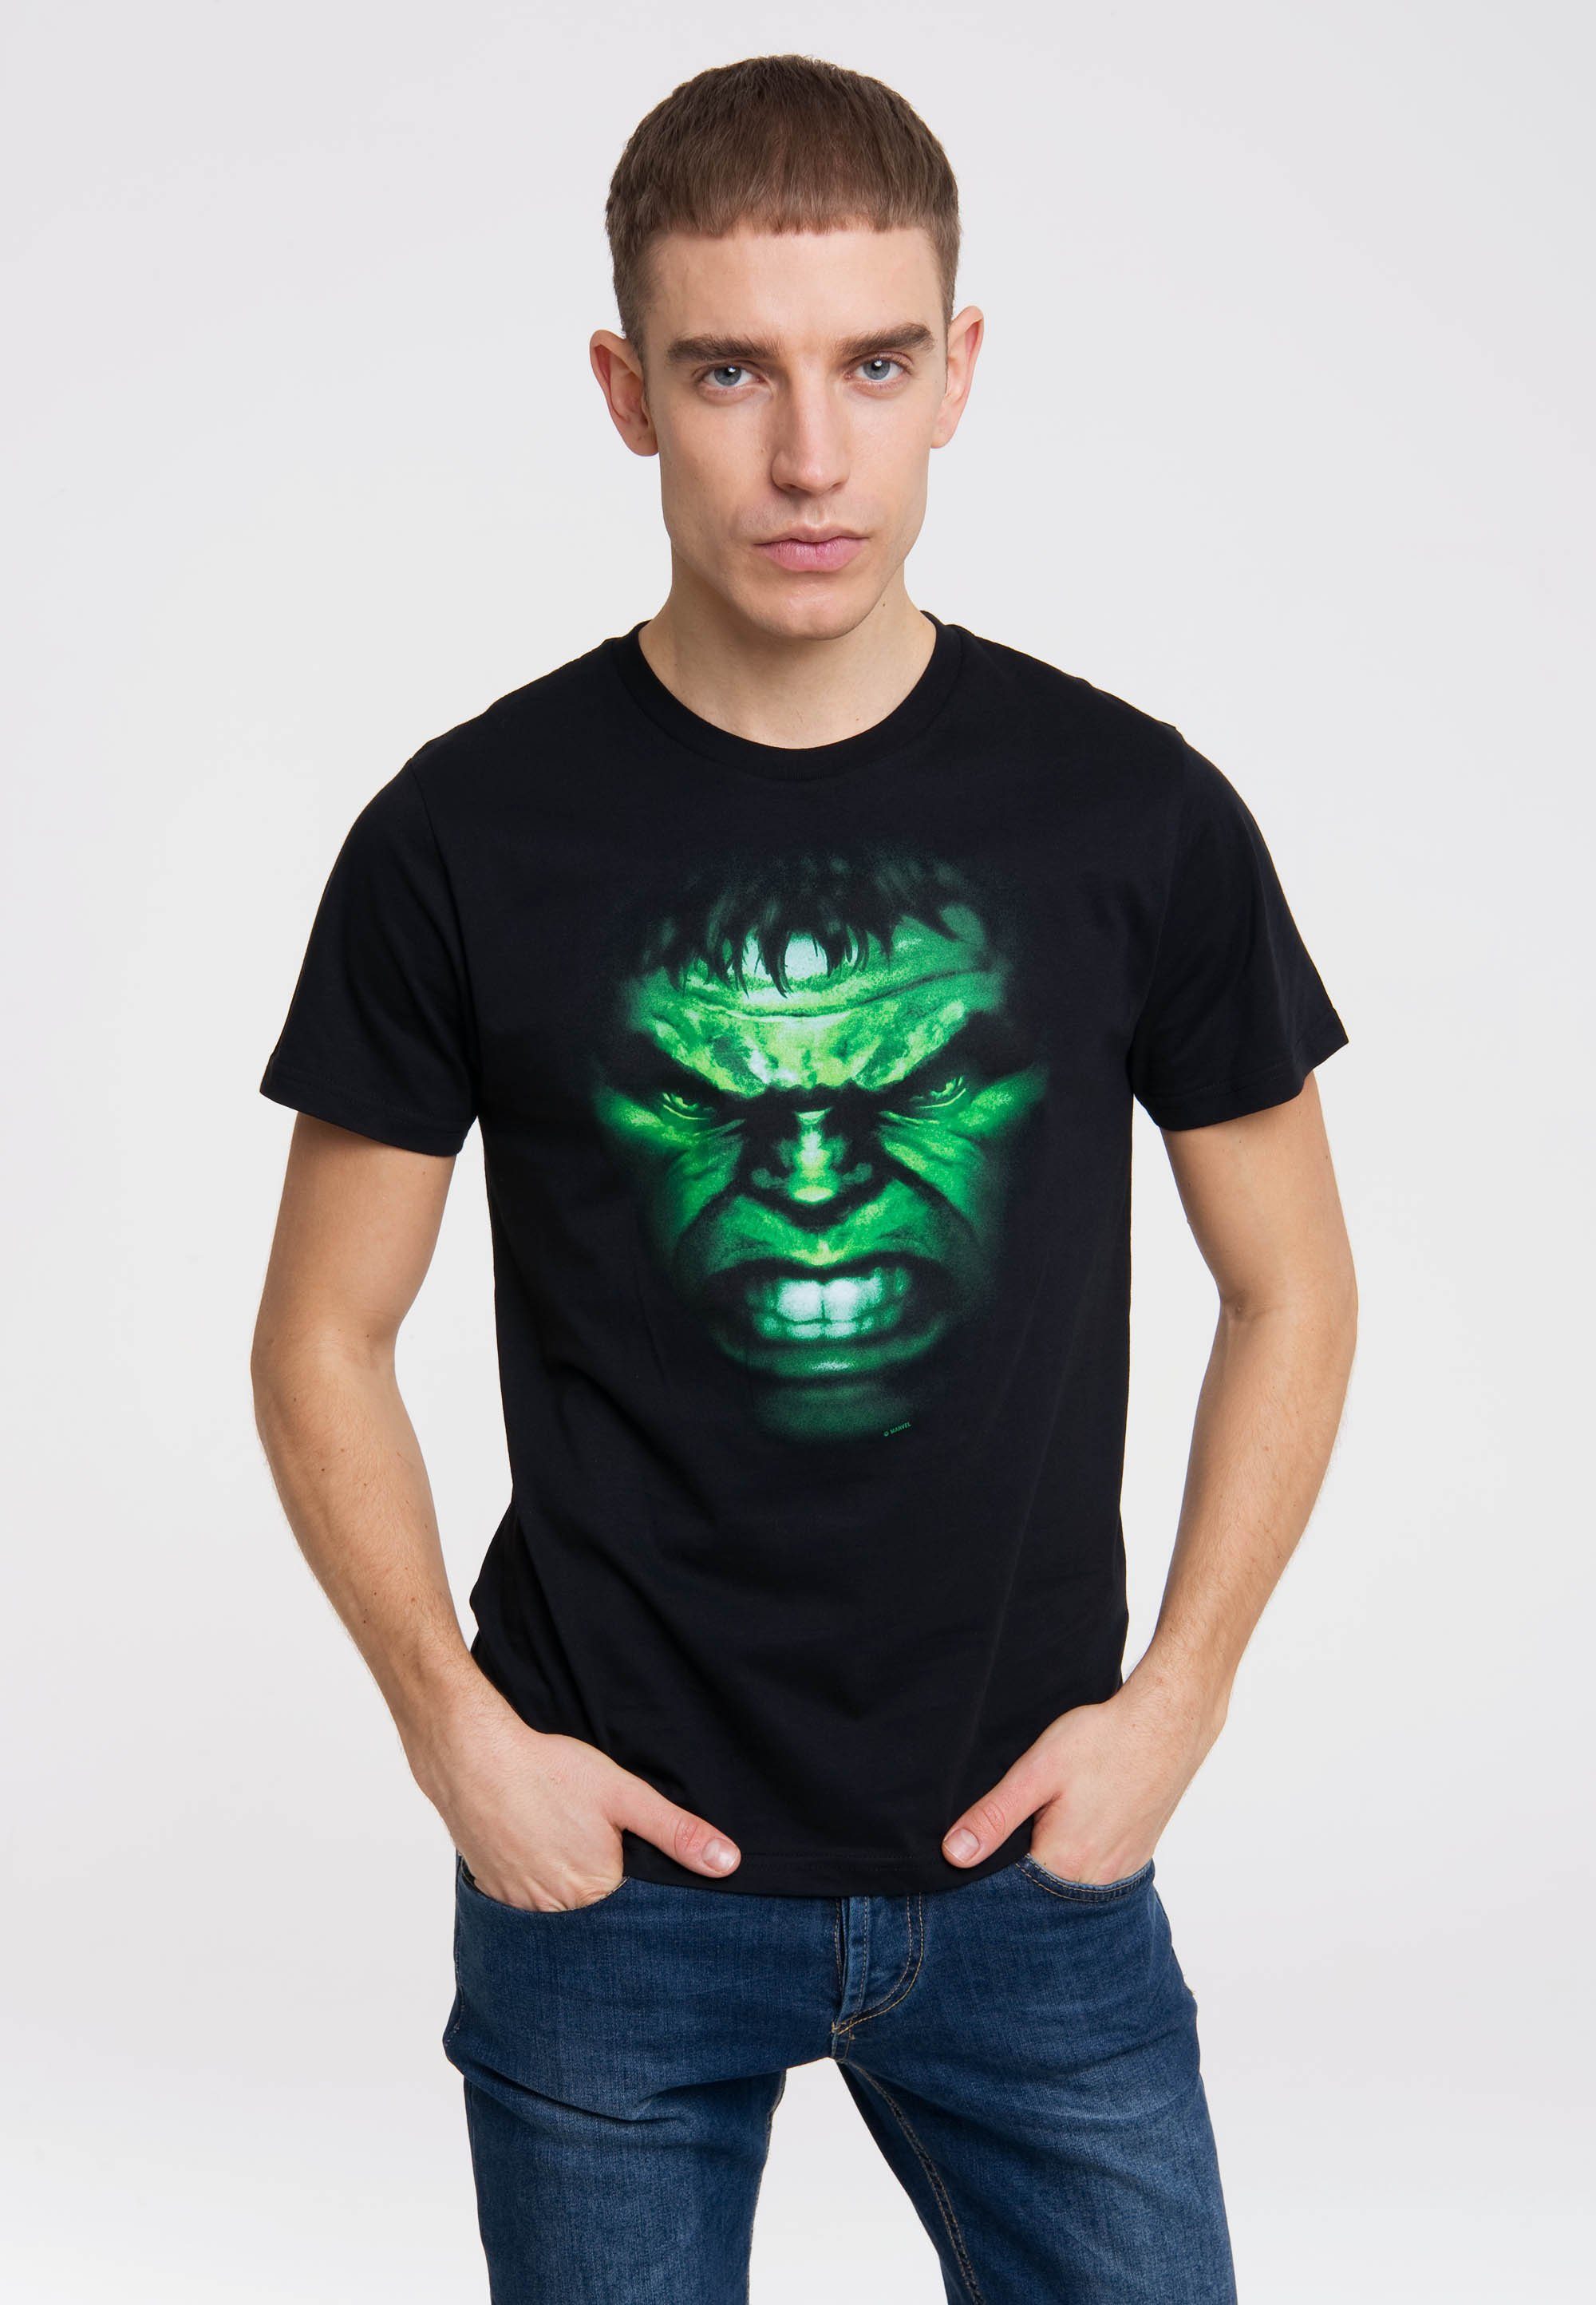 LOGOSHIRT T-Shirt Marvel - Hulk Gesicht mit coolem Hulk-Frontdruck